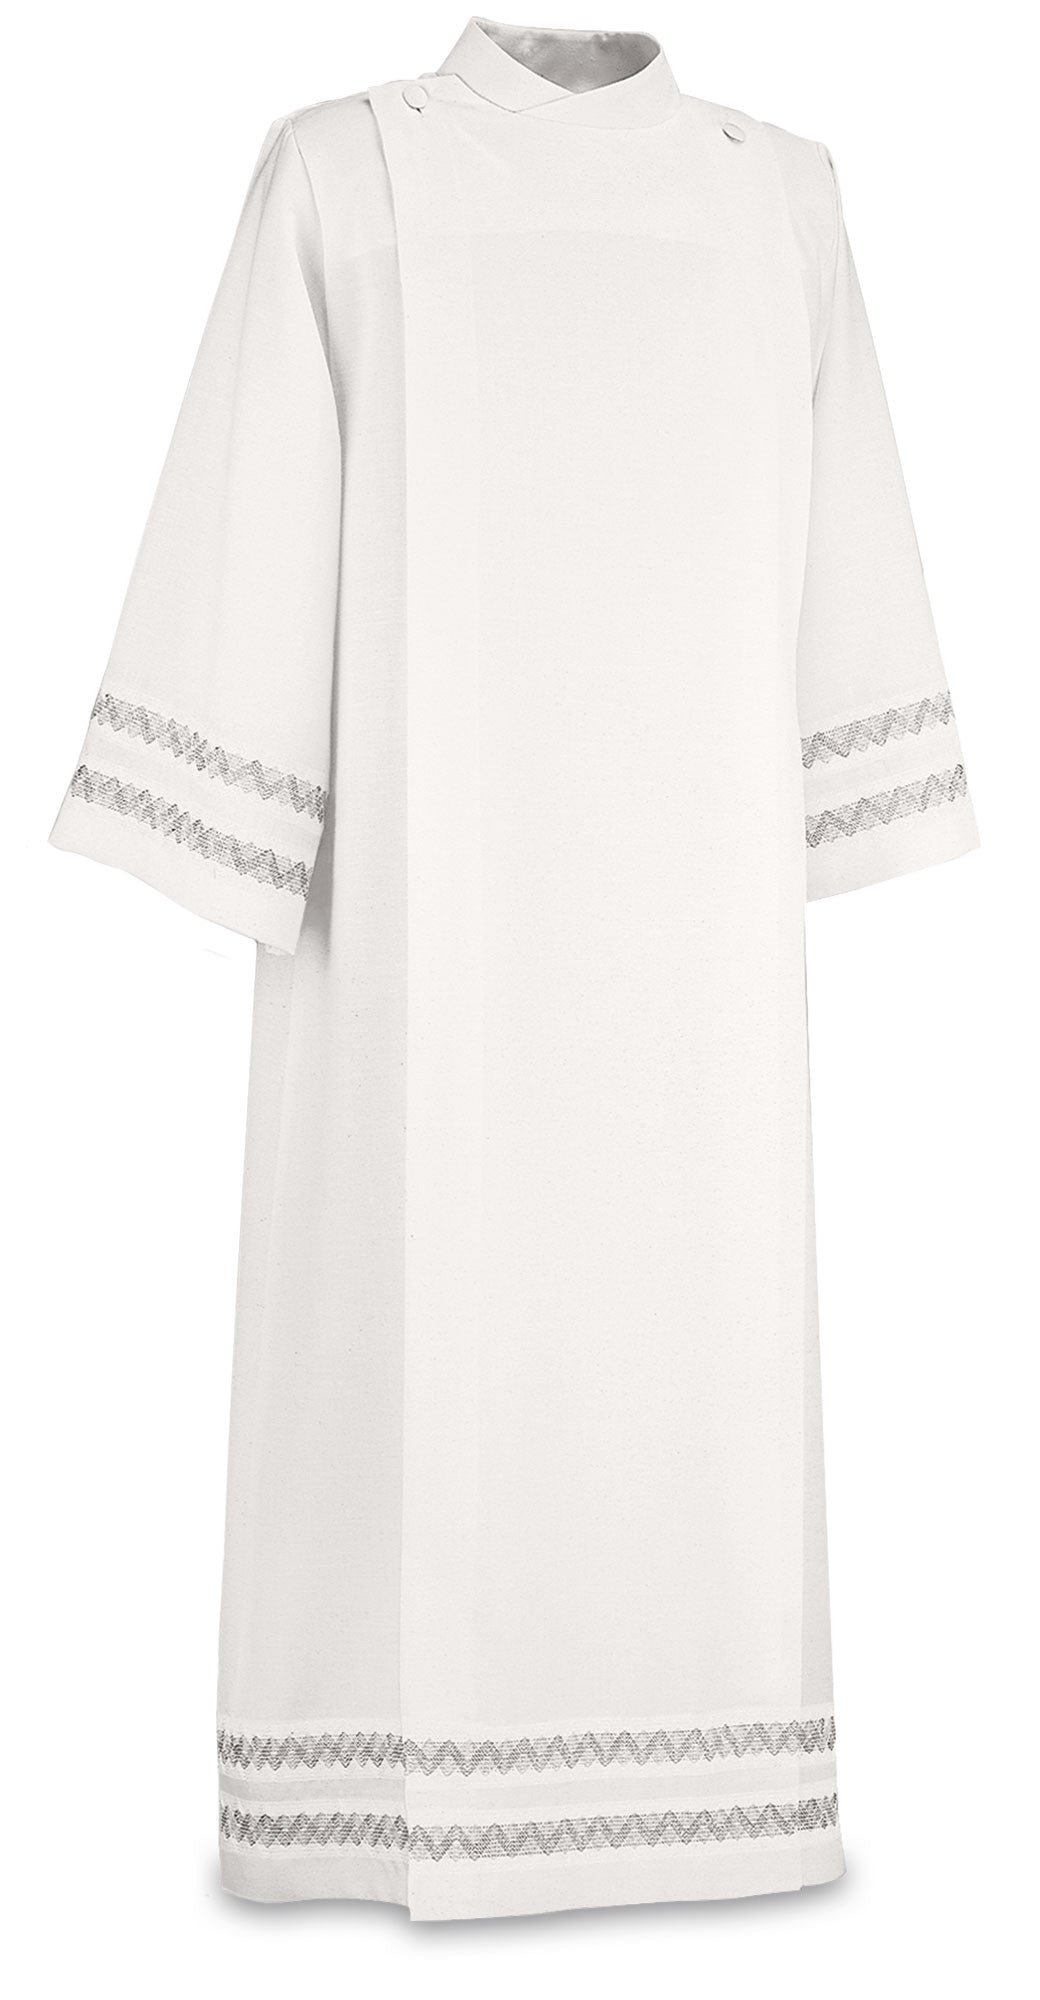 Womens Alb - Grey Embroidery - SLB30059W - Slabbinck - Chiarelli's Religious Goods & Church Supply